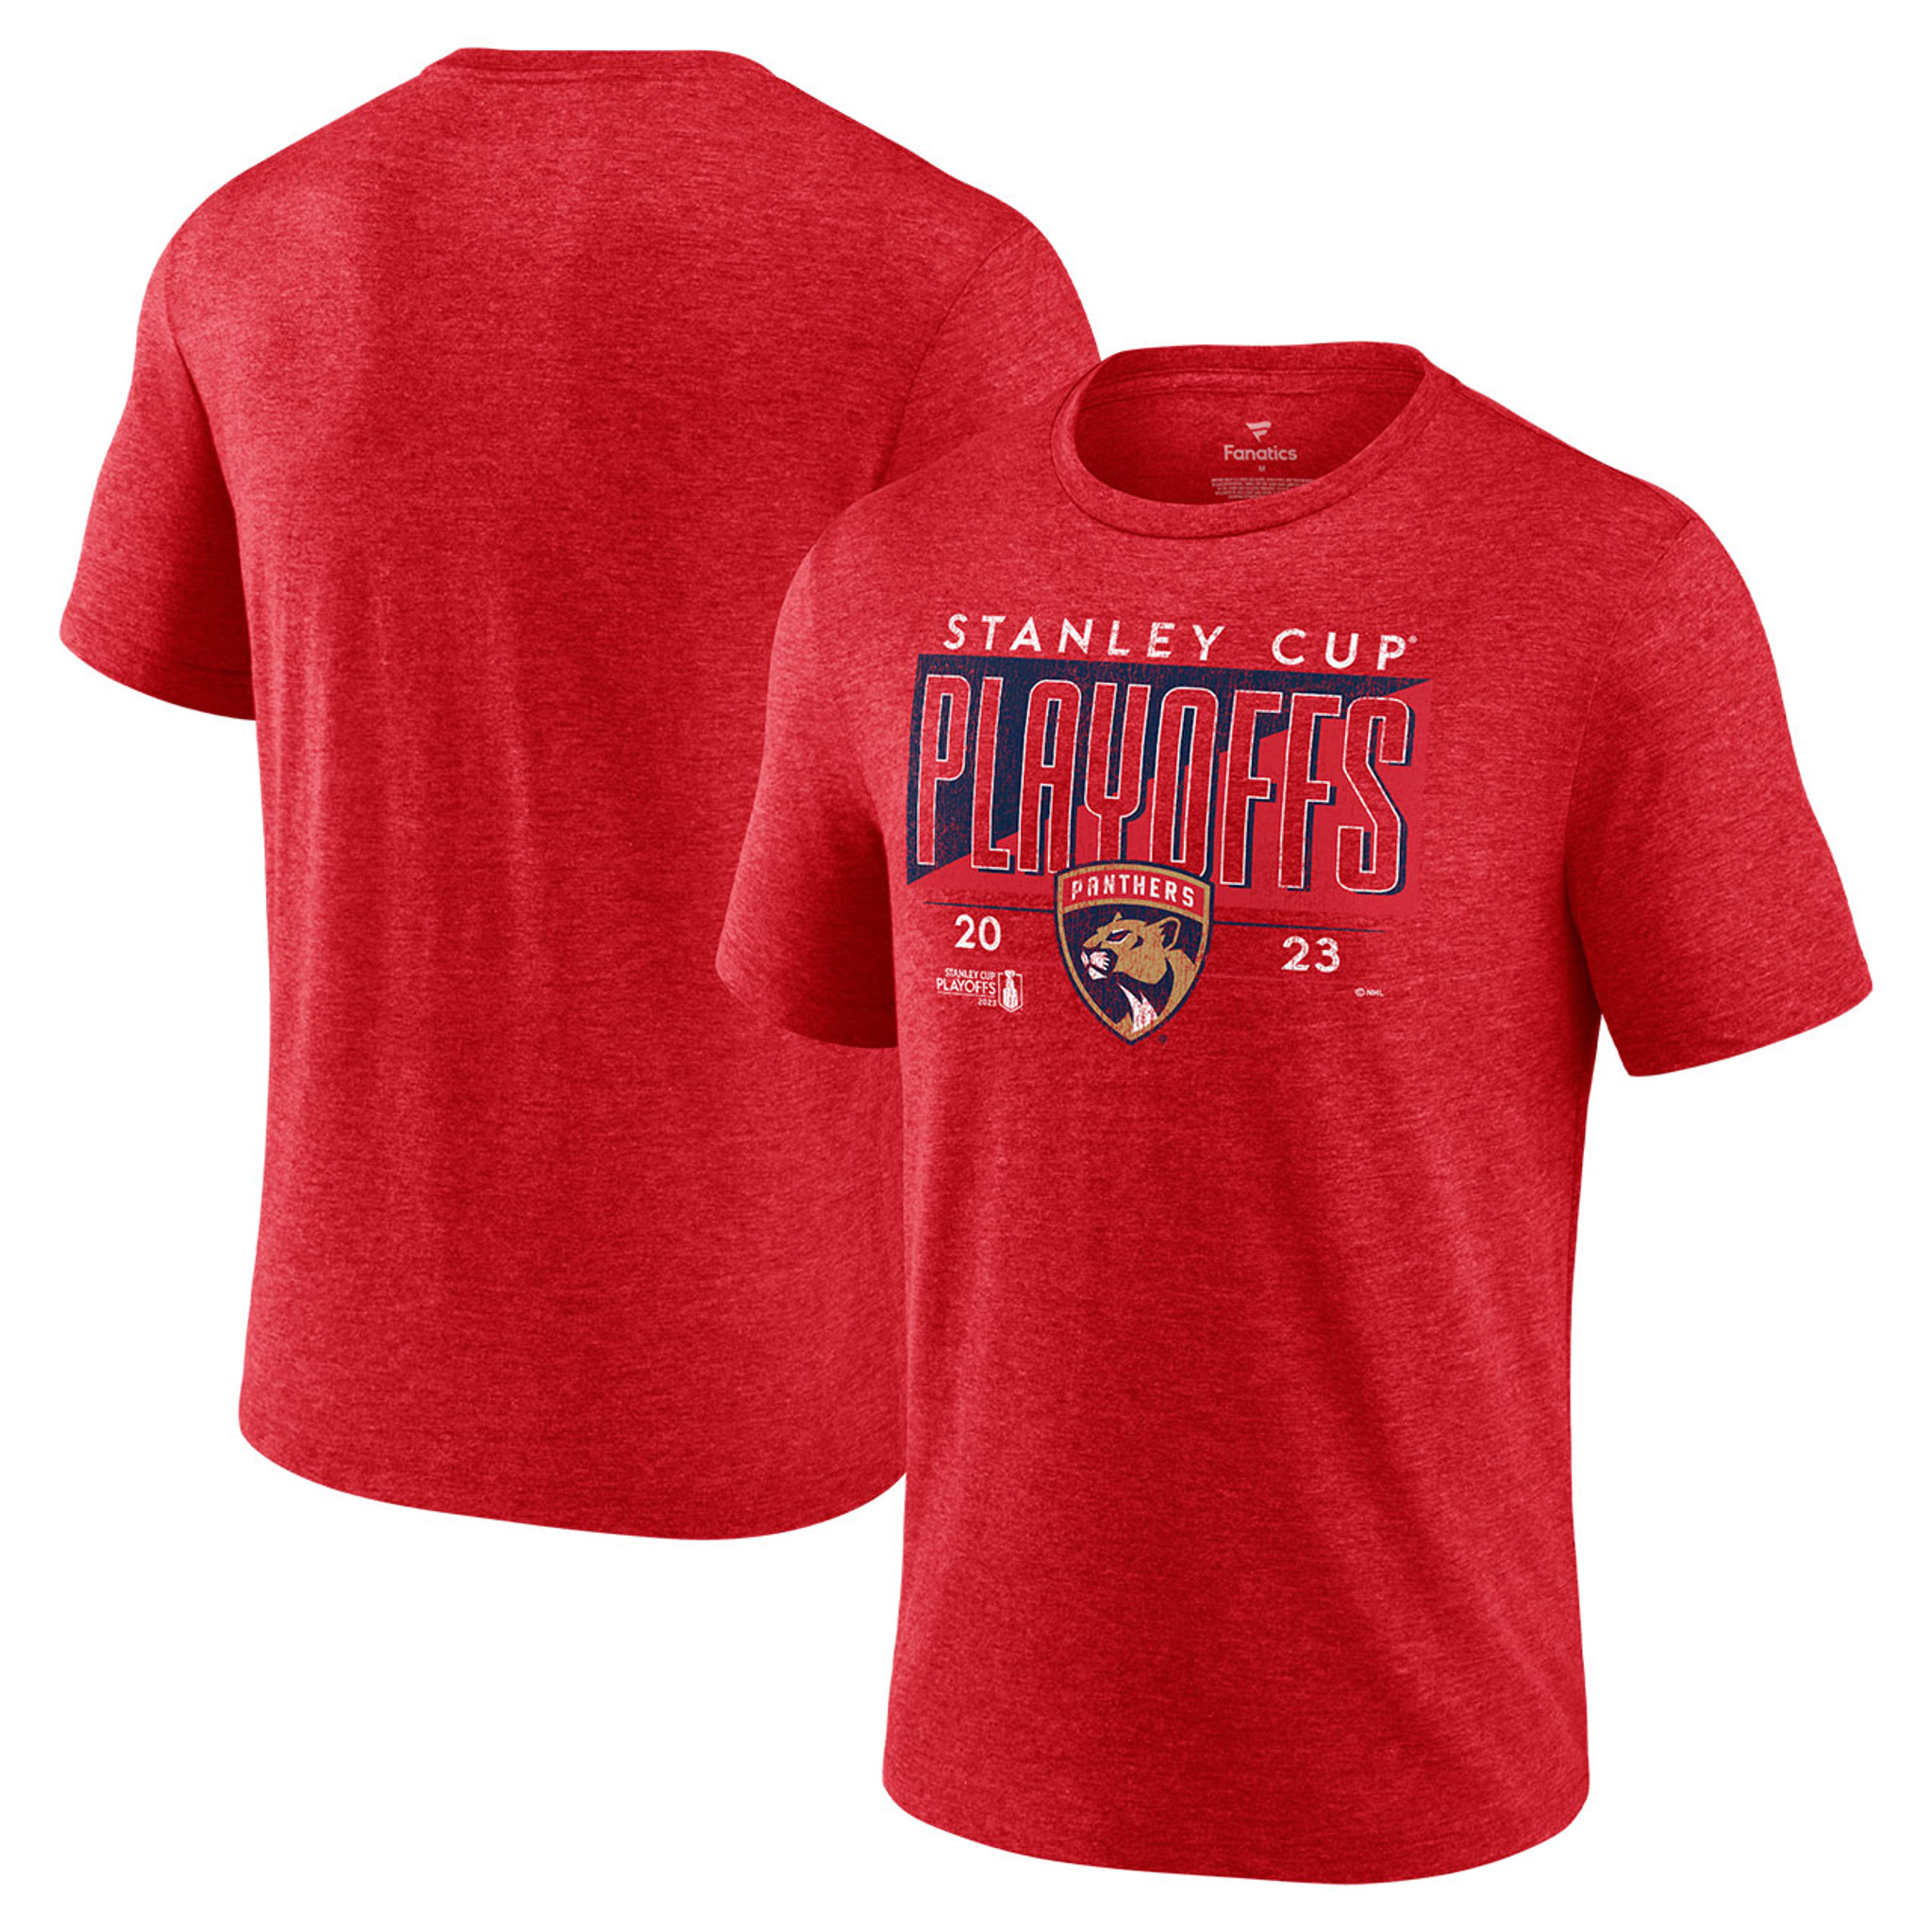 2021 Stanley Cup Playoffs Fanatics T-Shirt